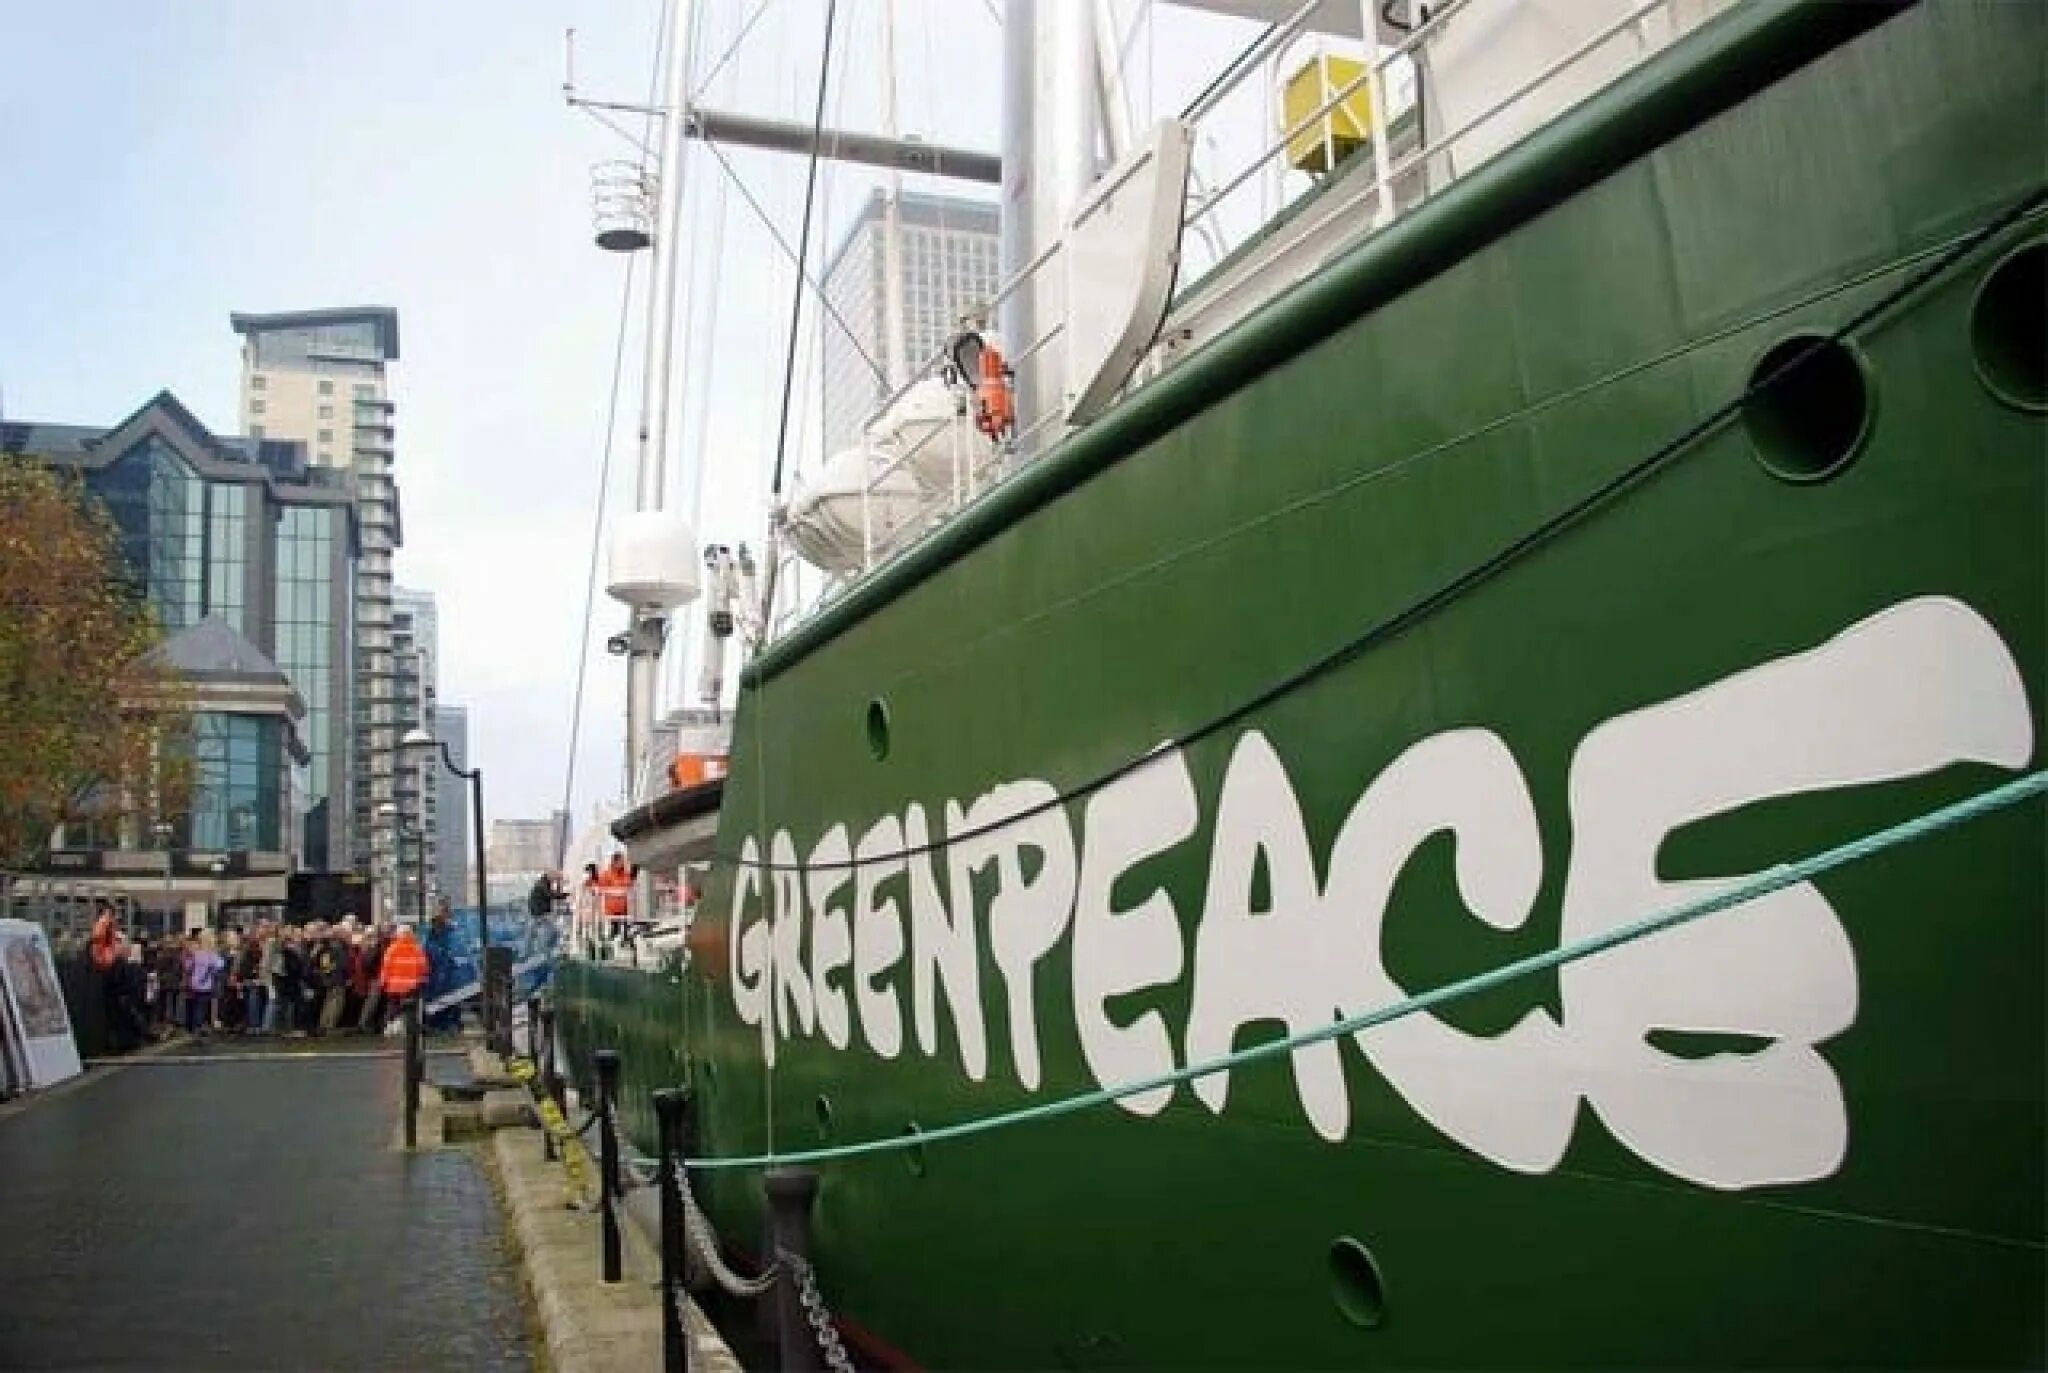 Гринпис 1971. Активисты Гринпис. 3. Гринпис (Greenpeace). Организация Гринпис в Англии. 3 greenpeace